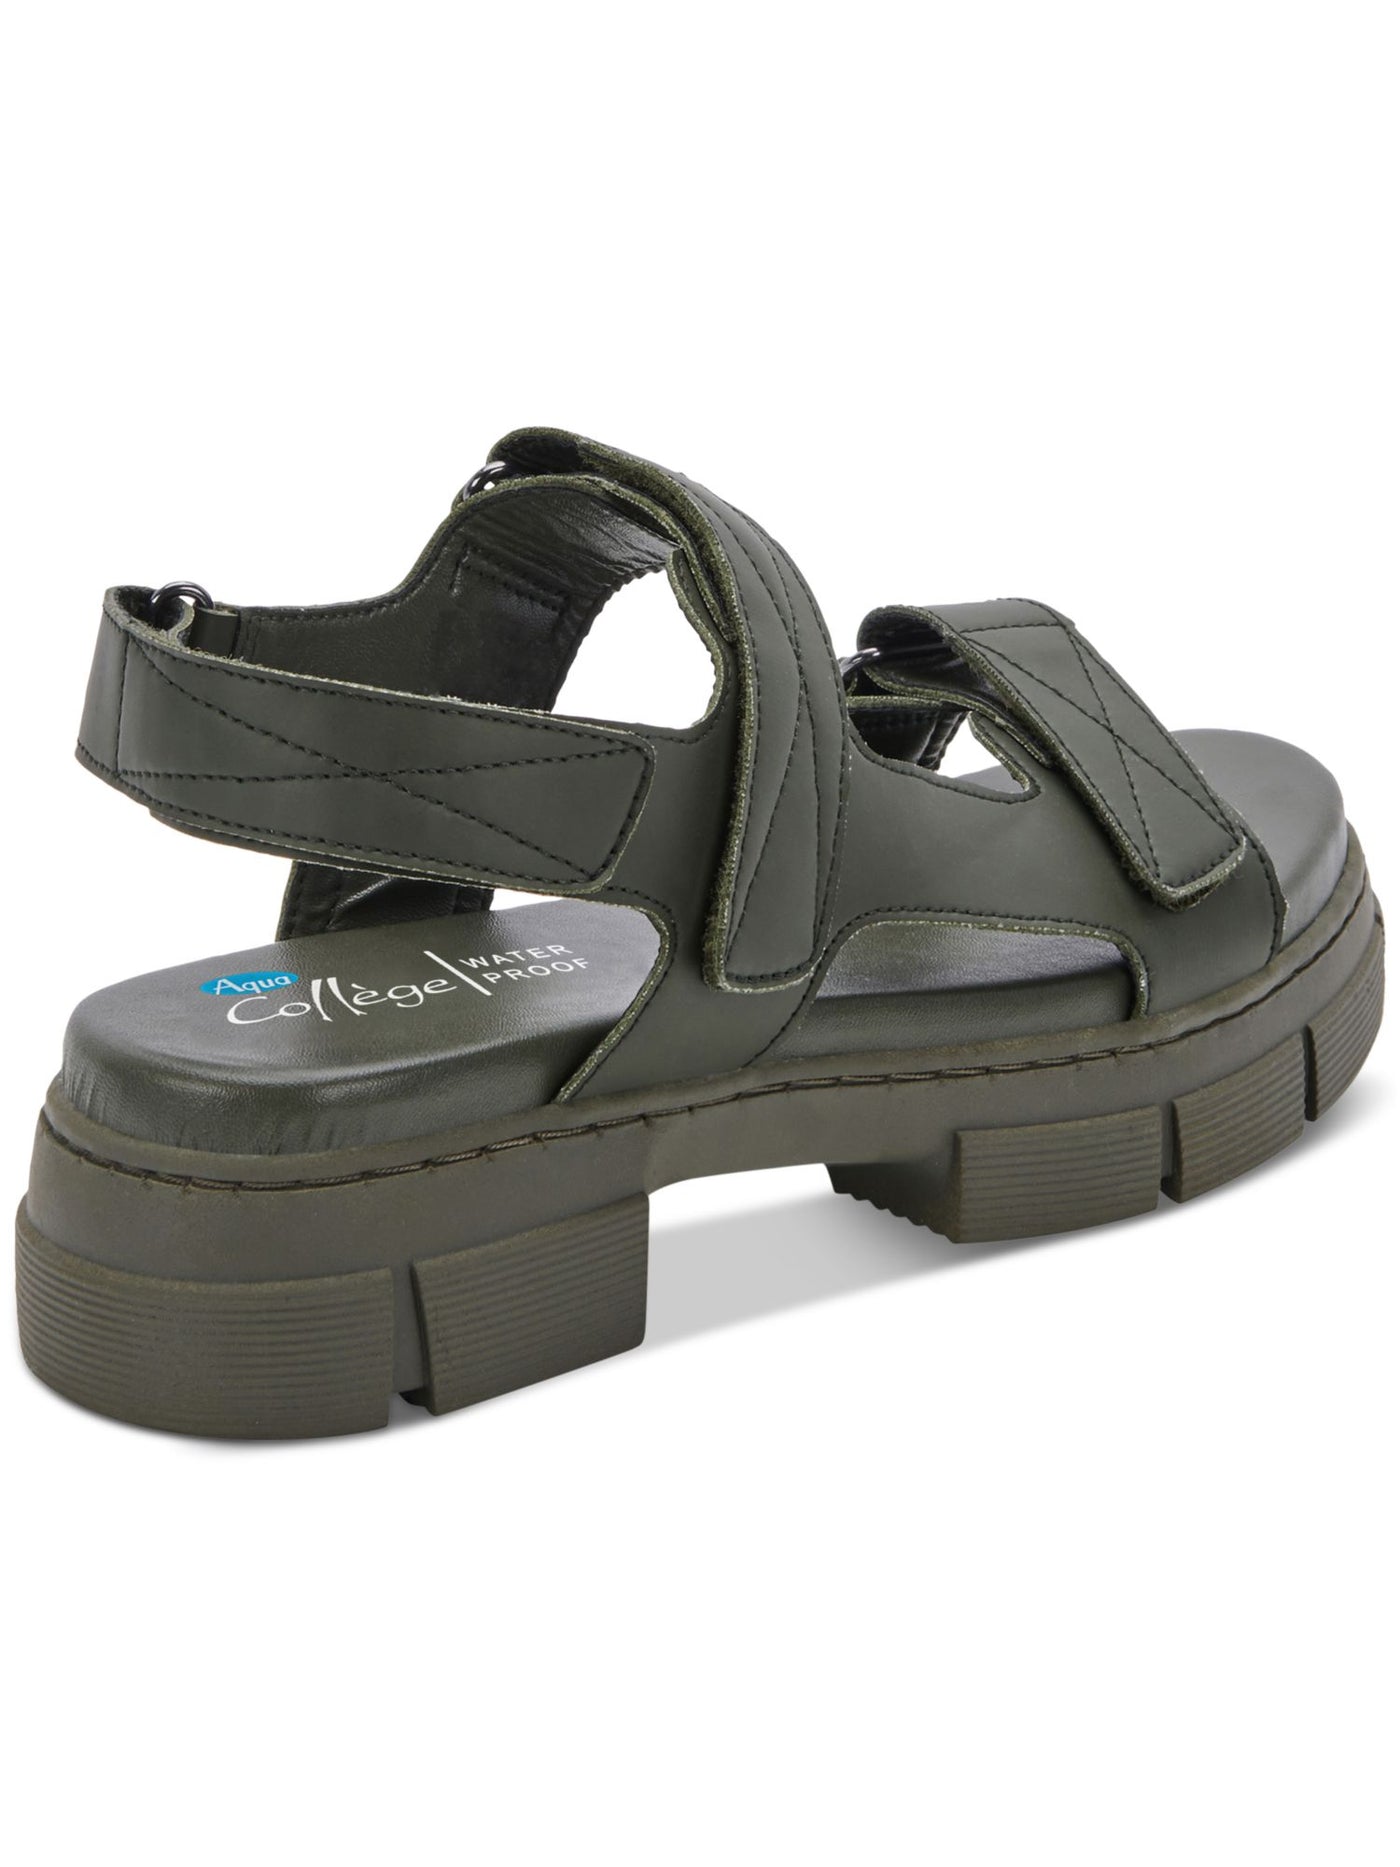 AQUA COLLEGE Womens Green Adjustable Waterproof Hux Round Toe Platform Slingback Sandal 7 M